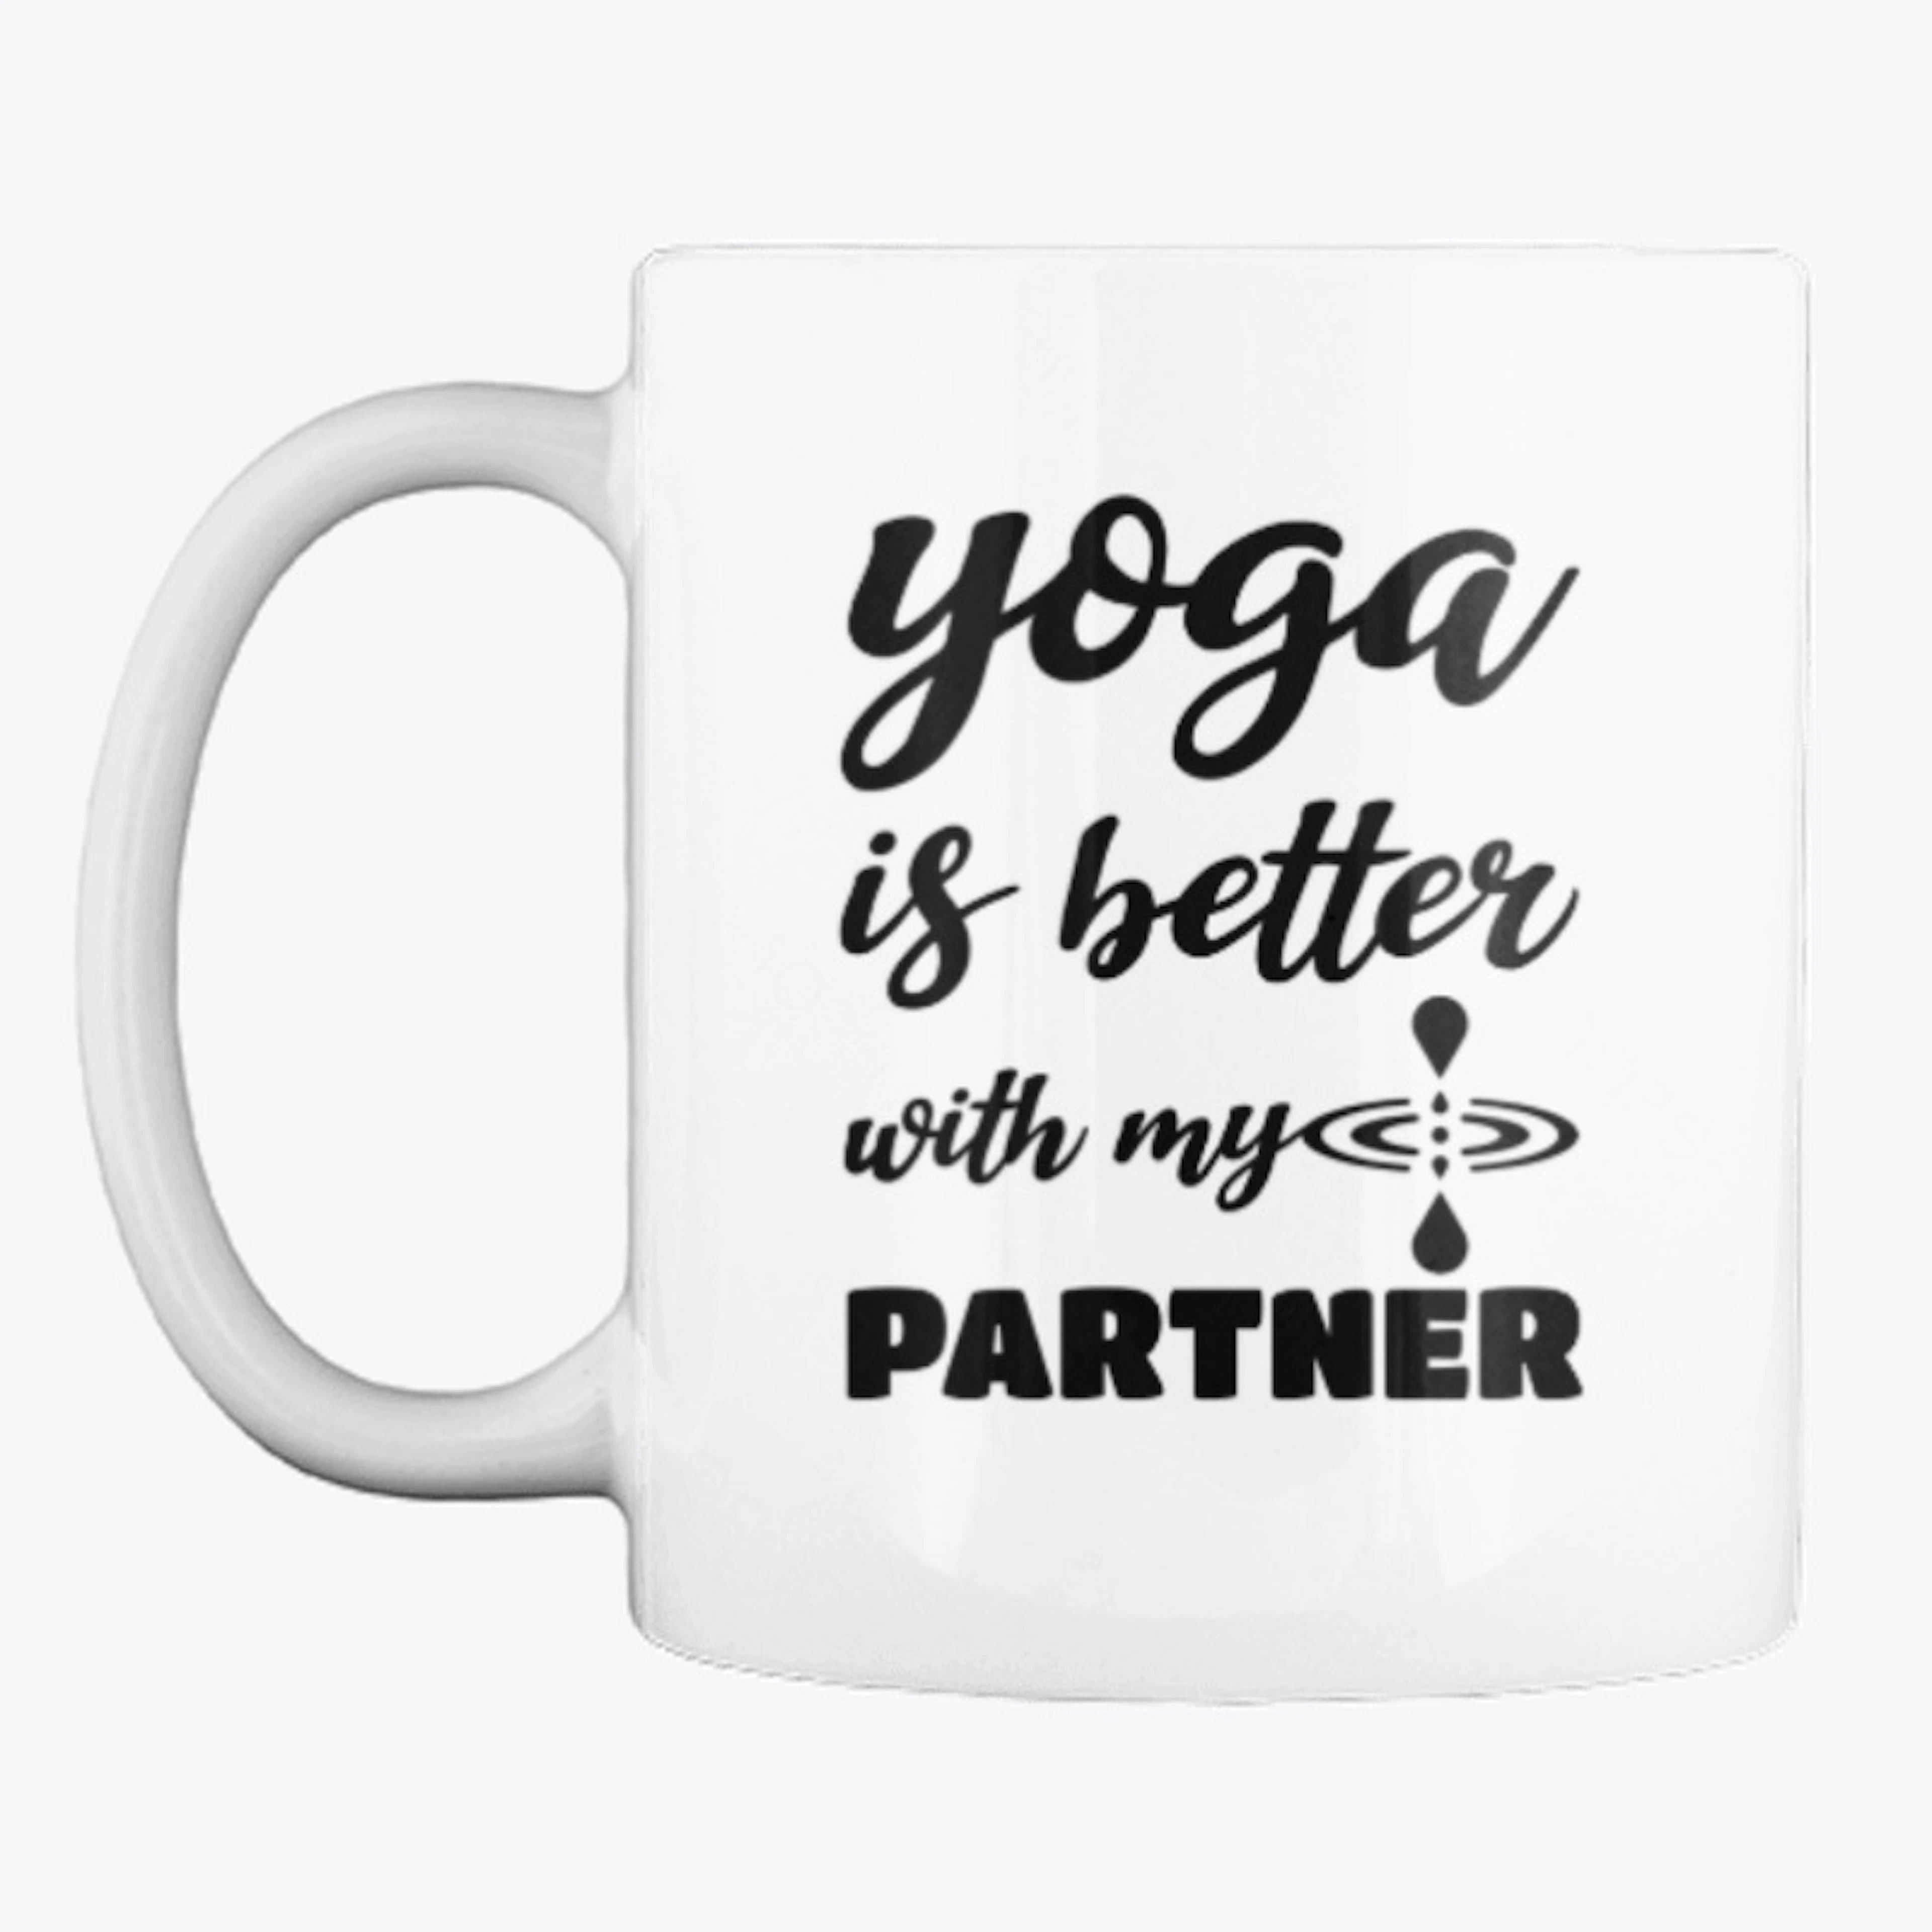 Yoga is better with partner coffee mug 